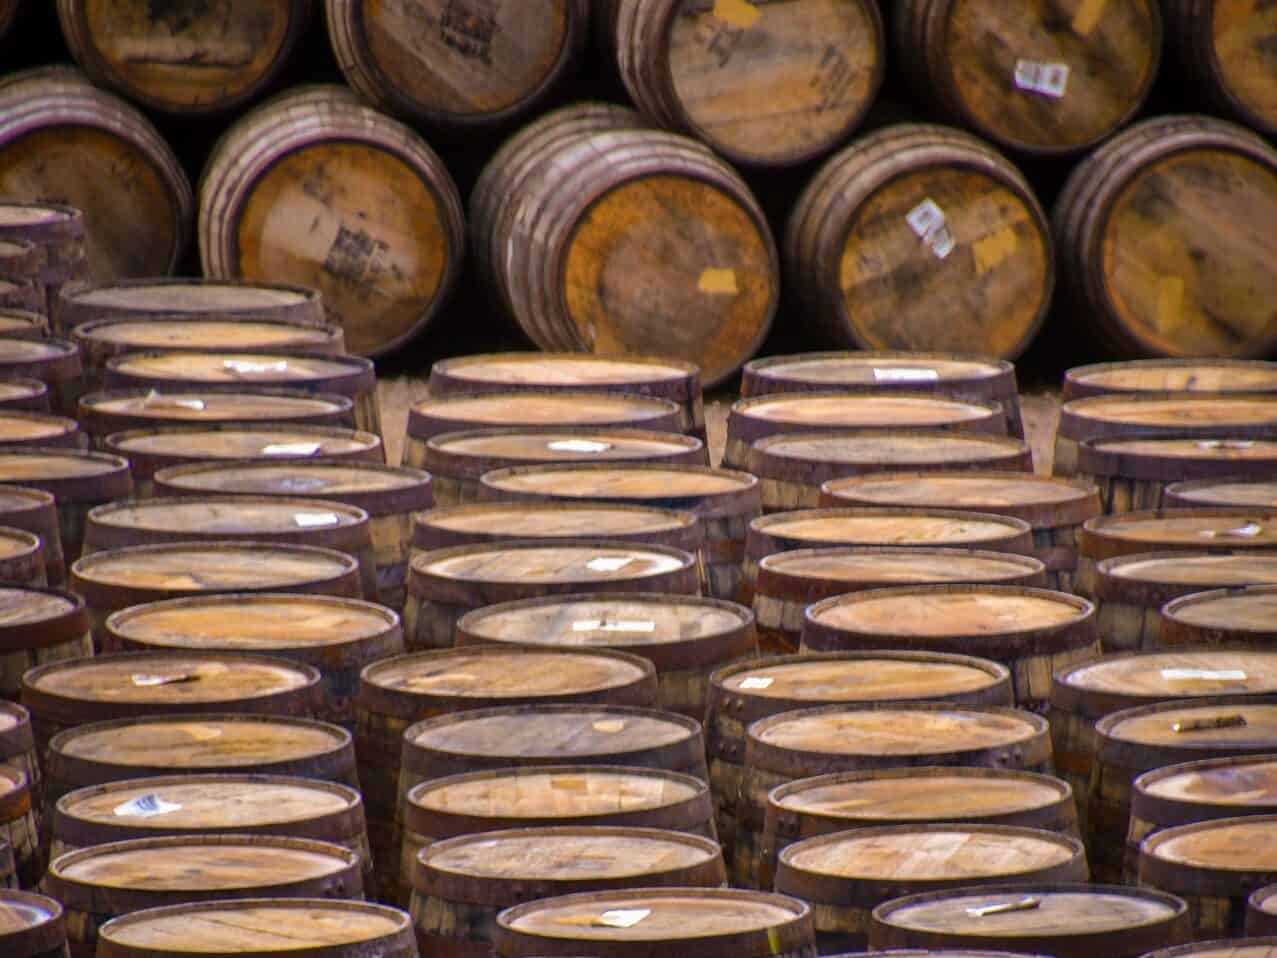 Whisky barrels in Scotland.